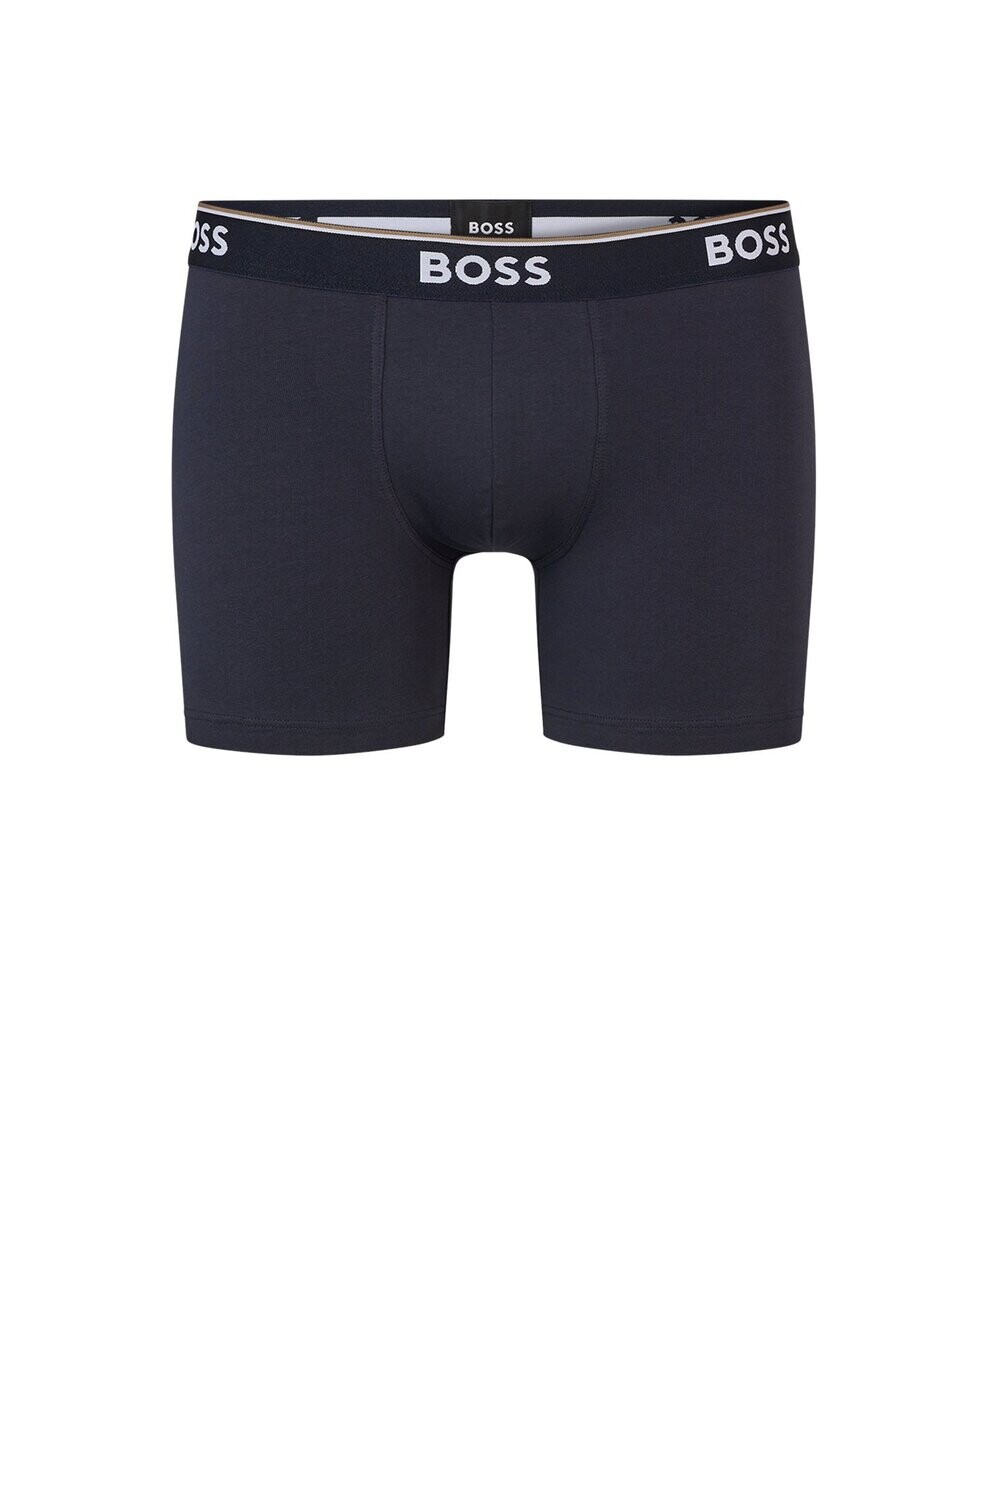 Hugo Boss 3 Pack Boxershorts